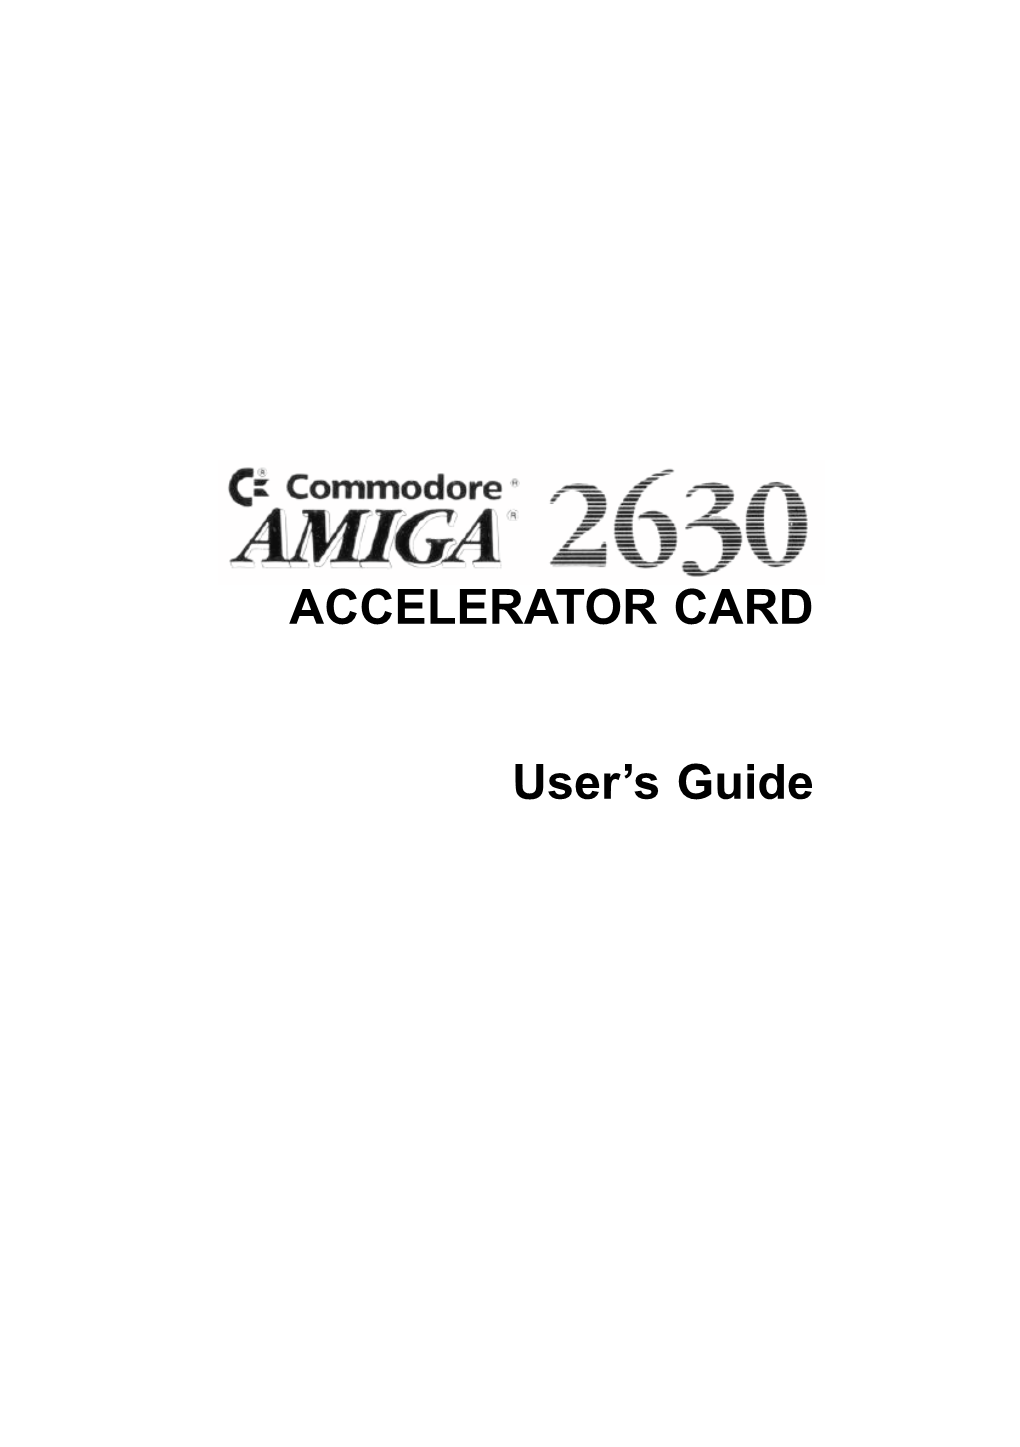 ACCELERATOR CARD User's Guide